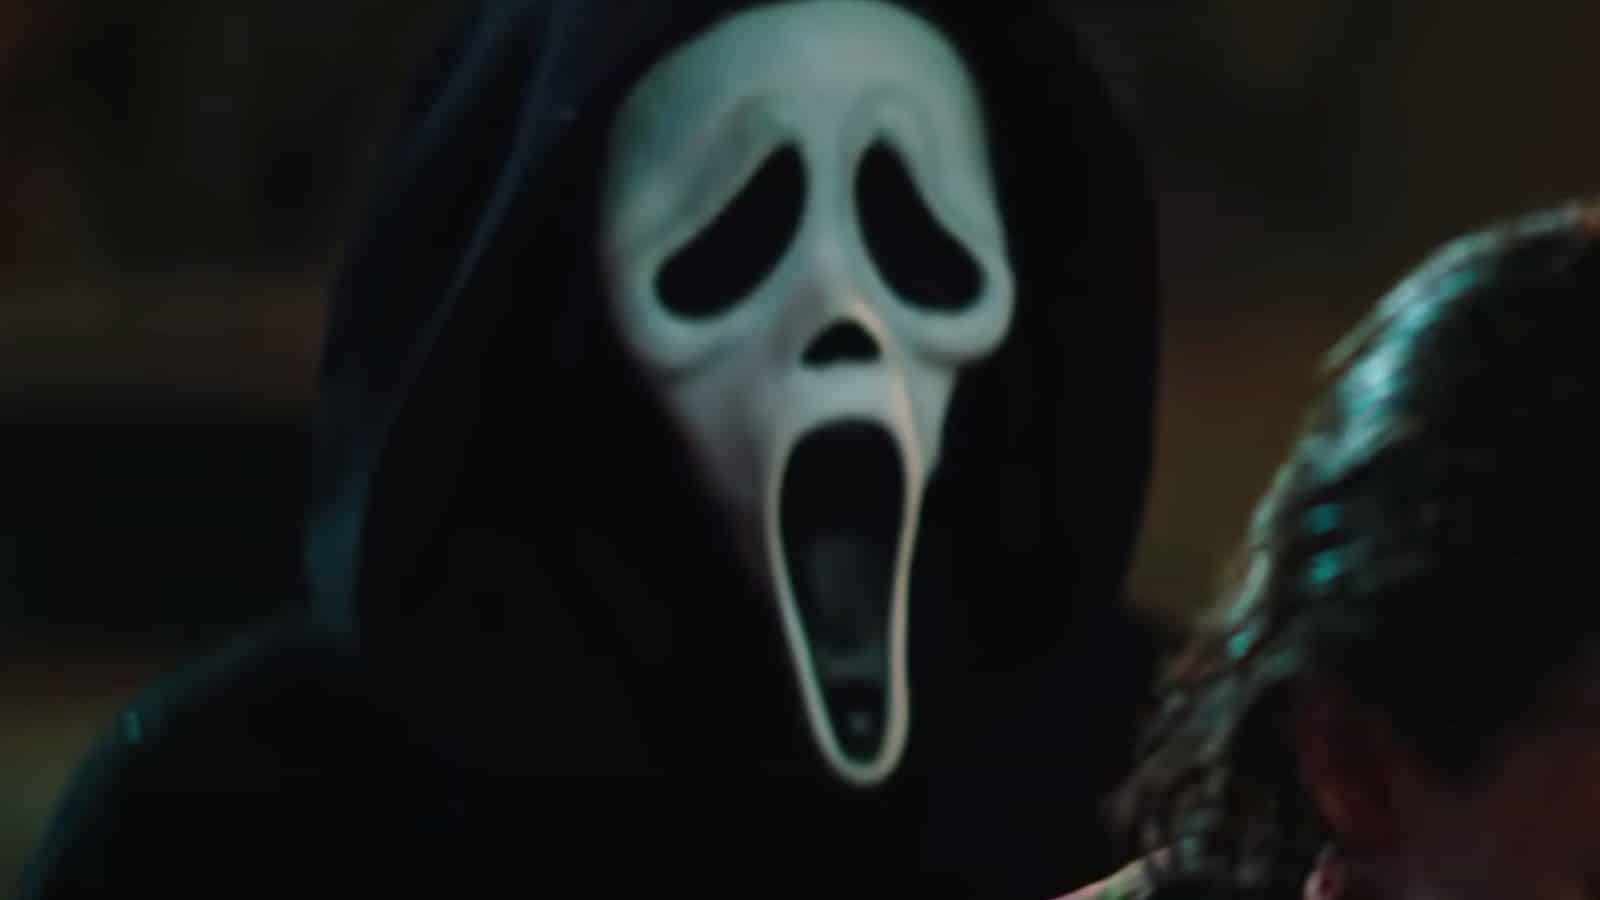 Image of Ghostface in Scream trailer